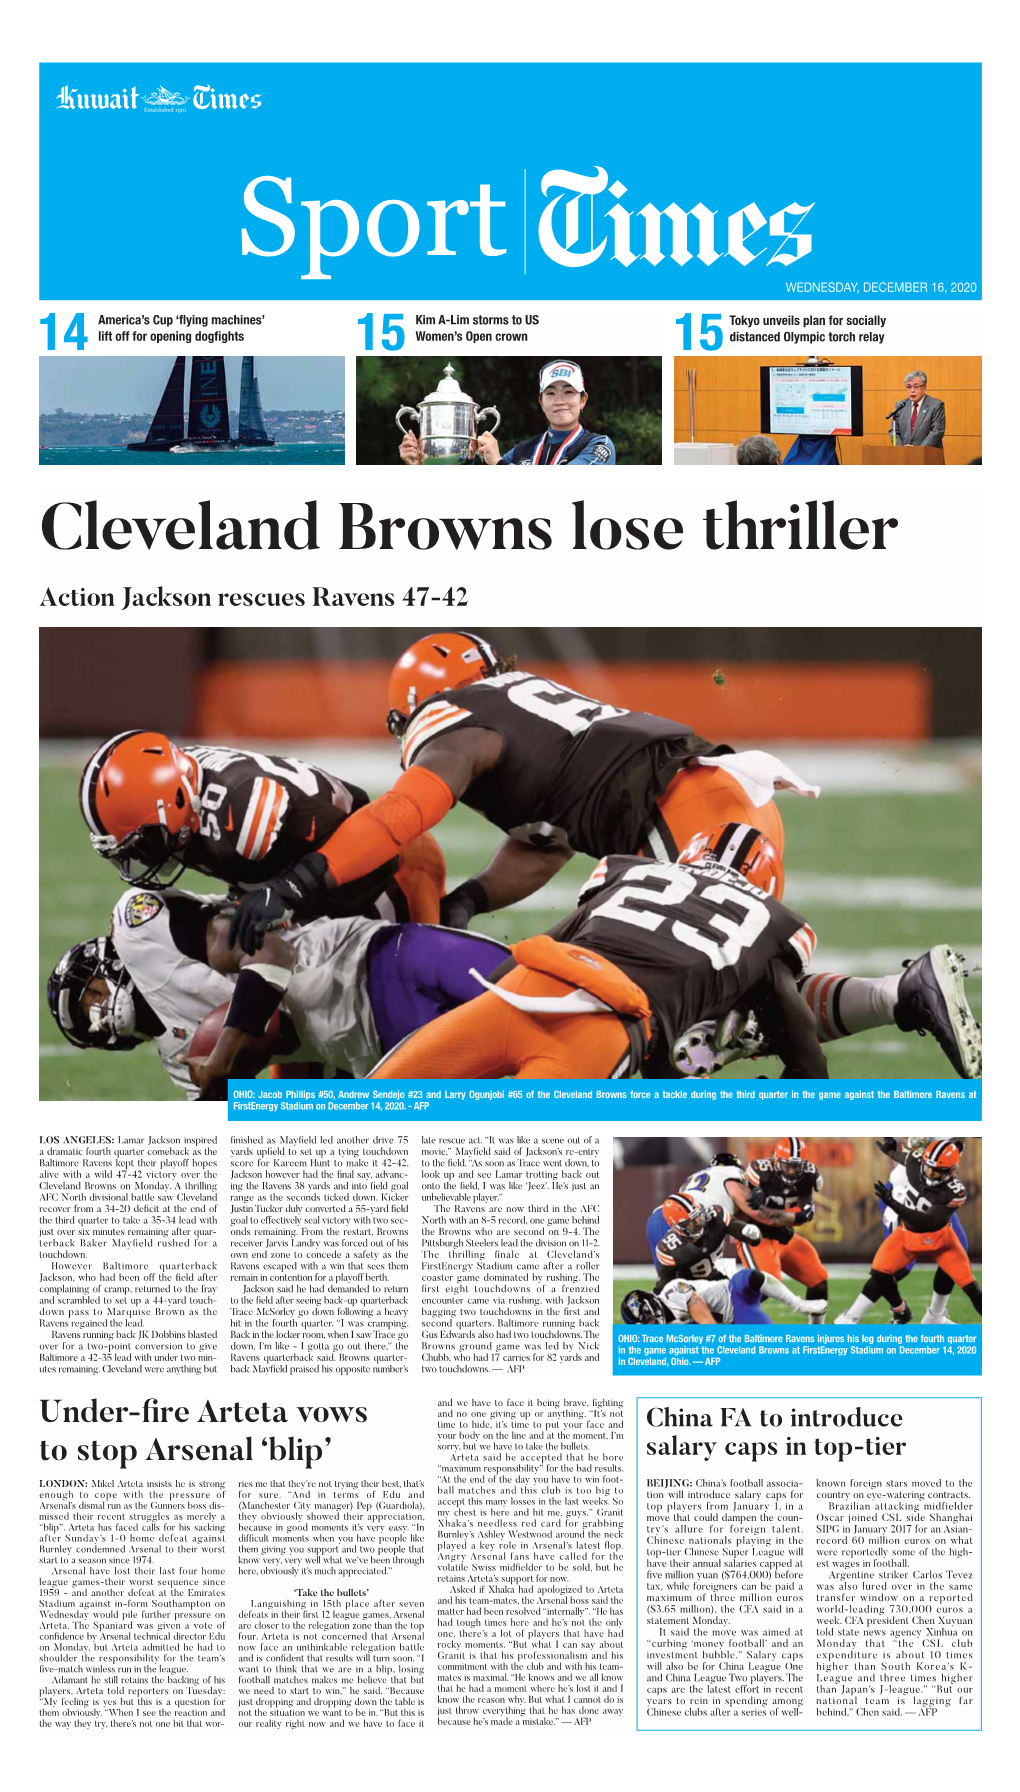 Cleveland Browns Lose Thriller